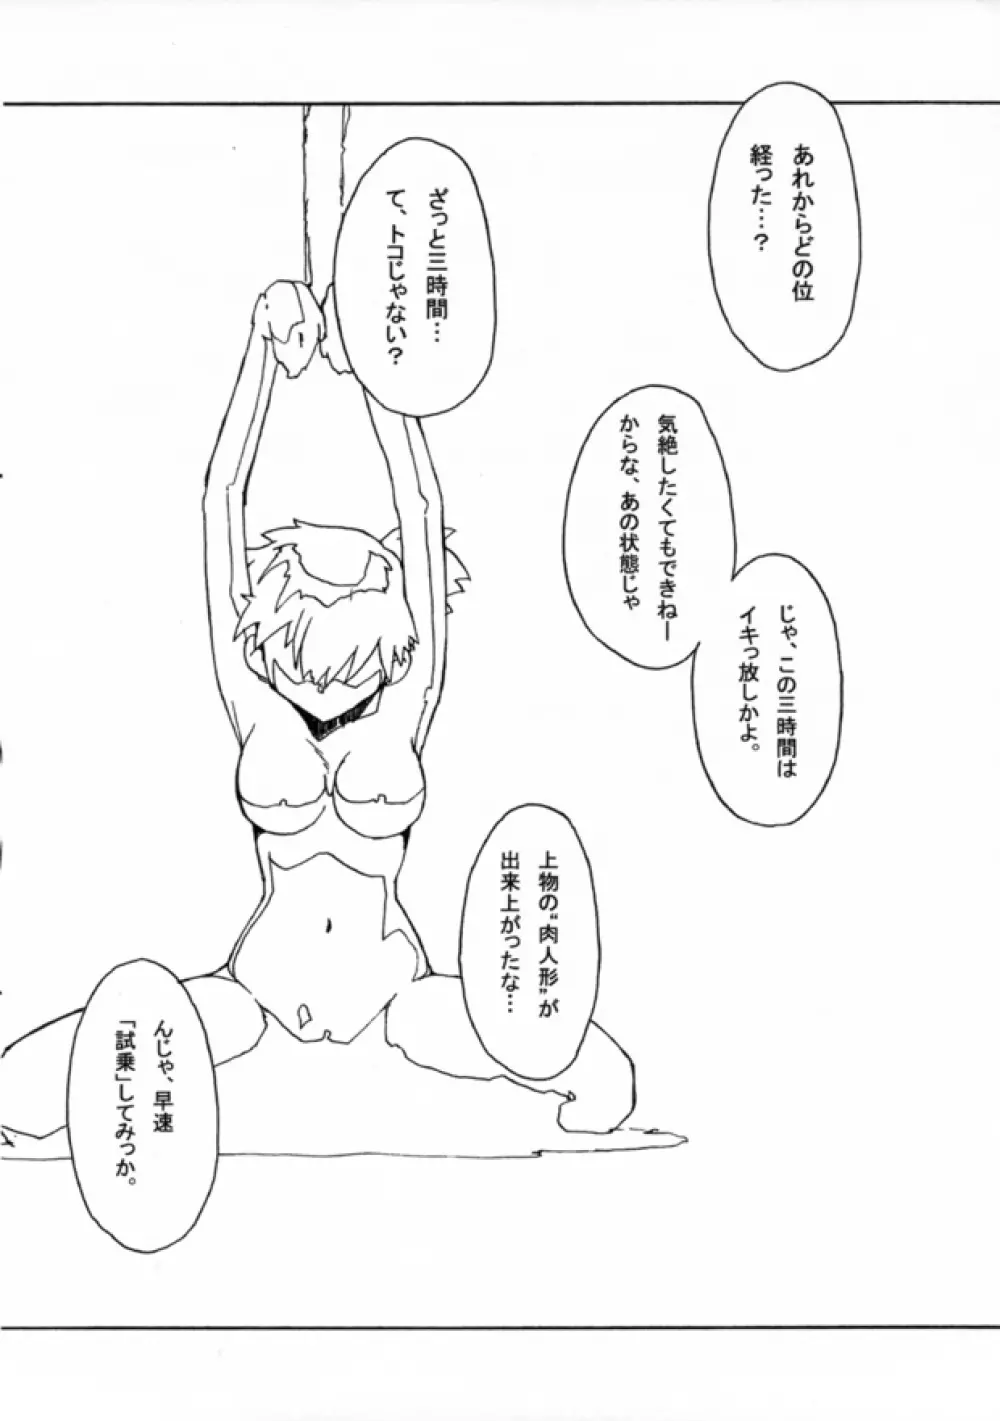 KASUMIX XPLOSION Kasumi Comic part5 - page53